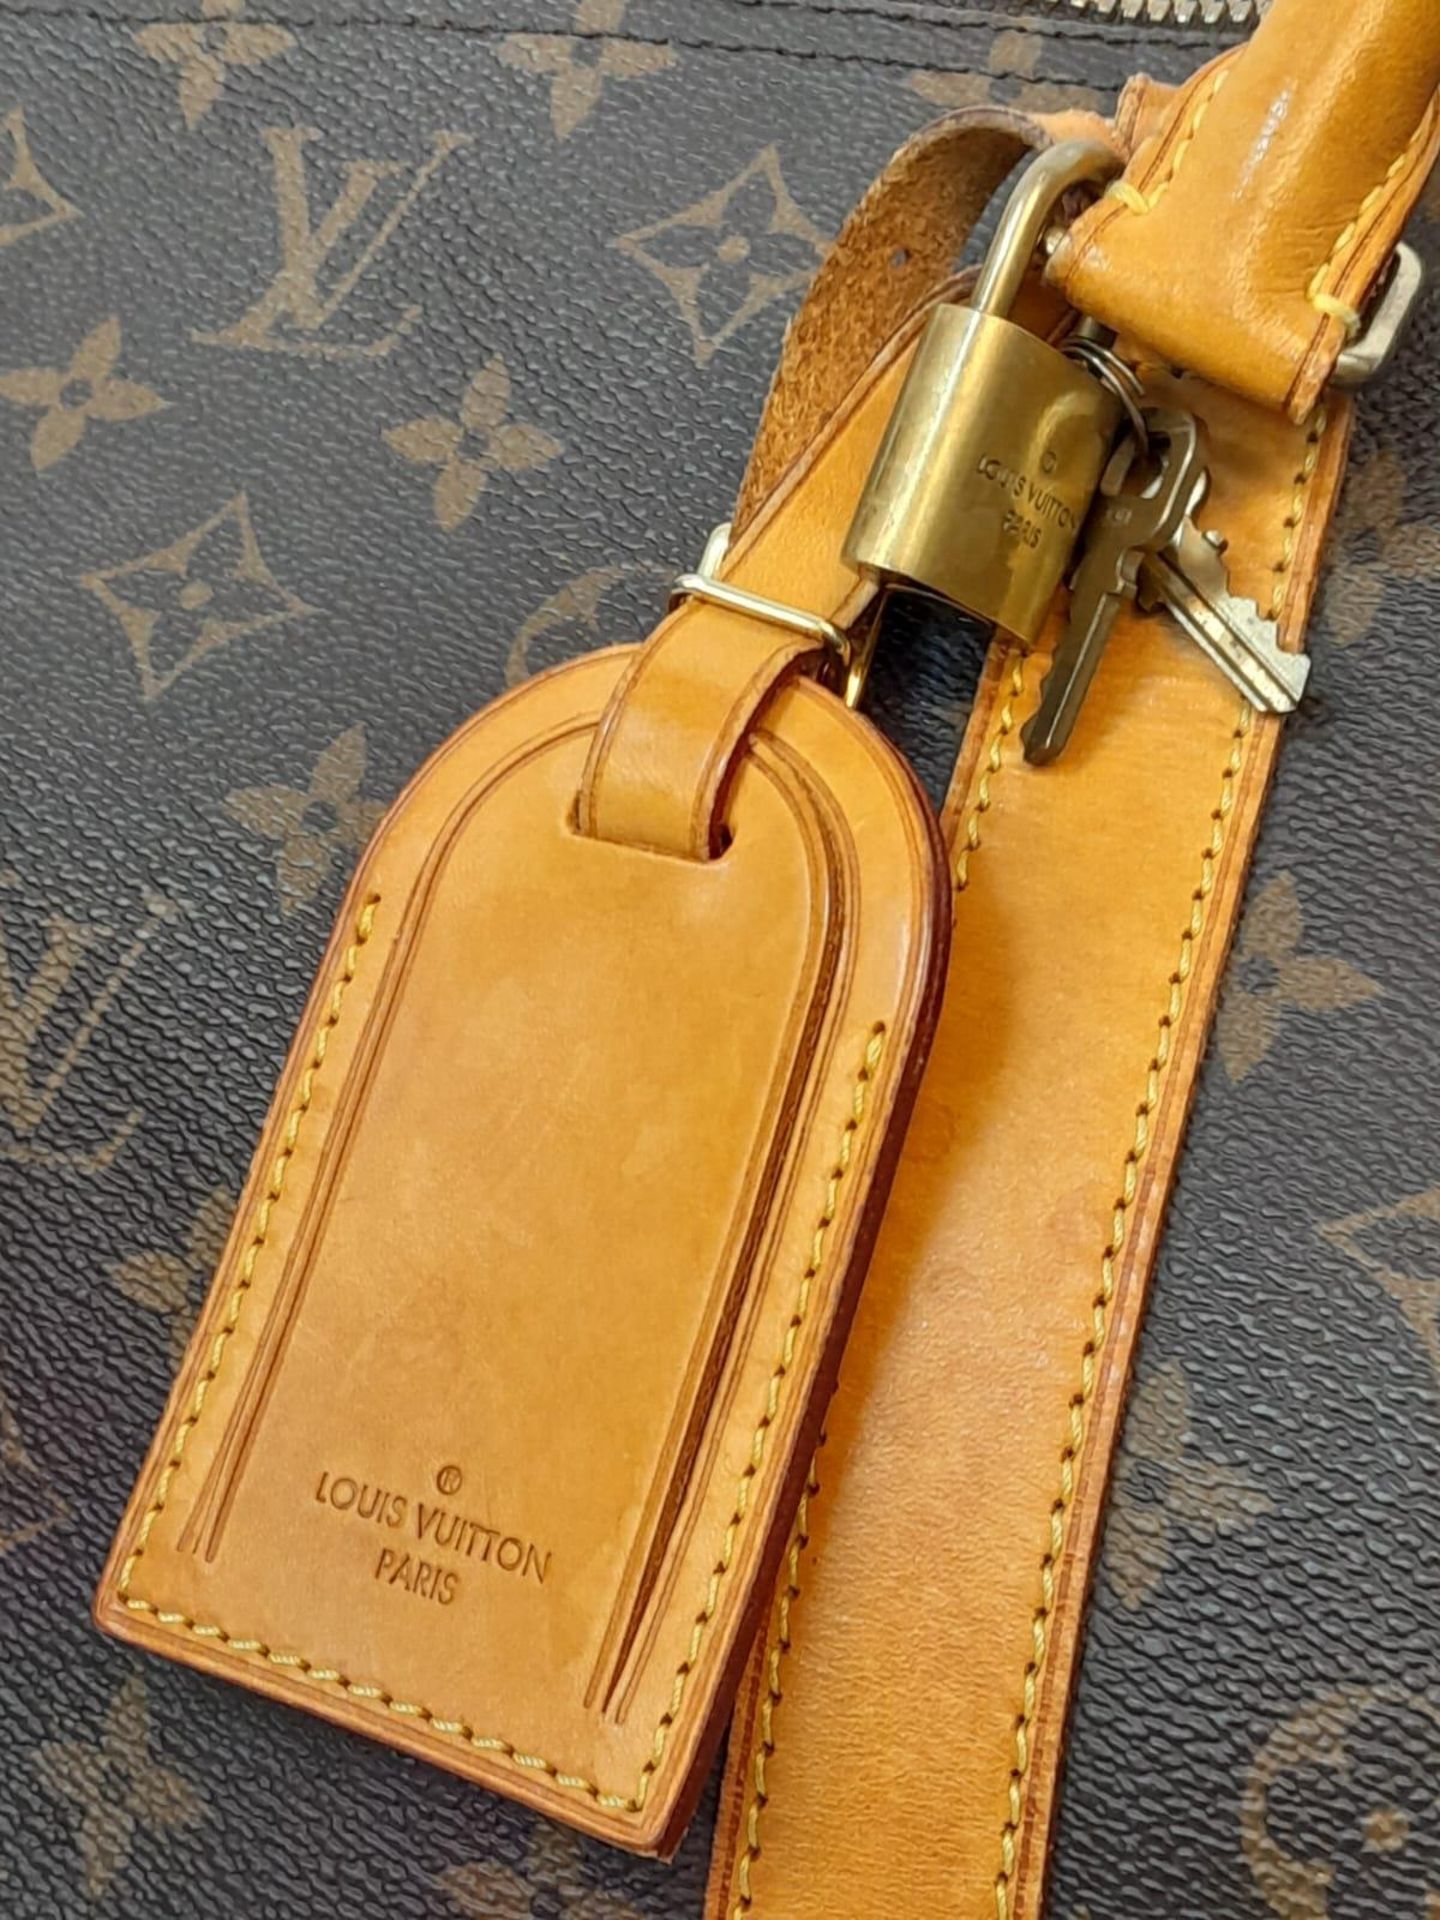 A Large Louis Vuitton Keepall Travel Bag. Monogram LV canvas exterior with cowhide leather handles - Bild 4 aus 8